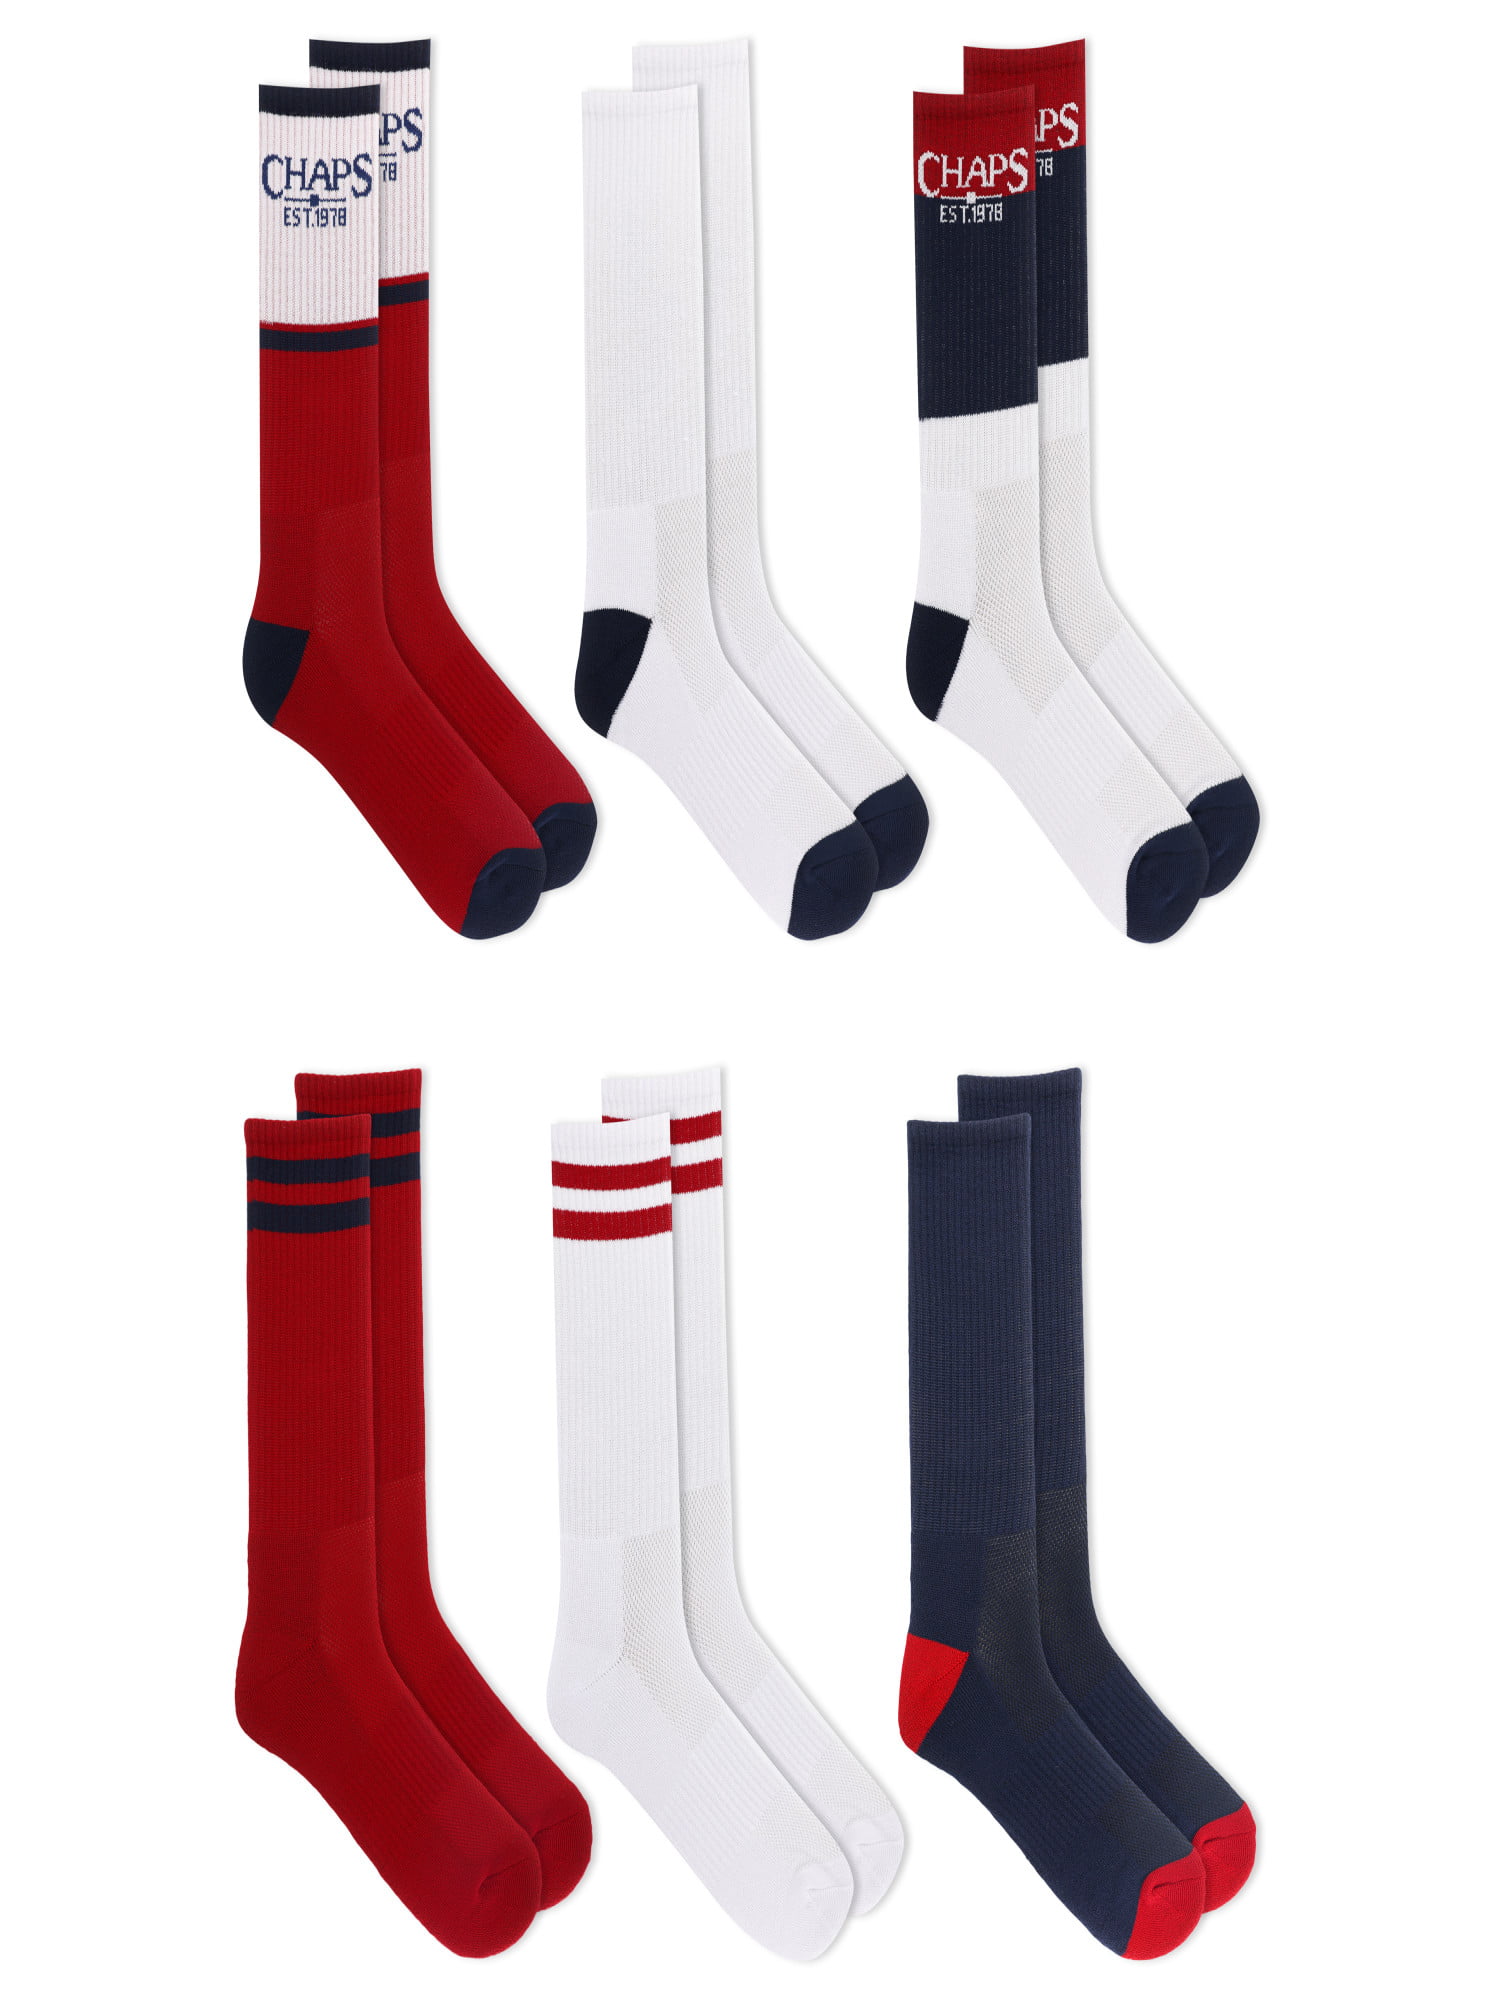 Fun Socks Men's  Charcoal Teal Fuschia Vertical Stripe Crew Socks Size 10-13 